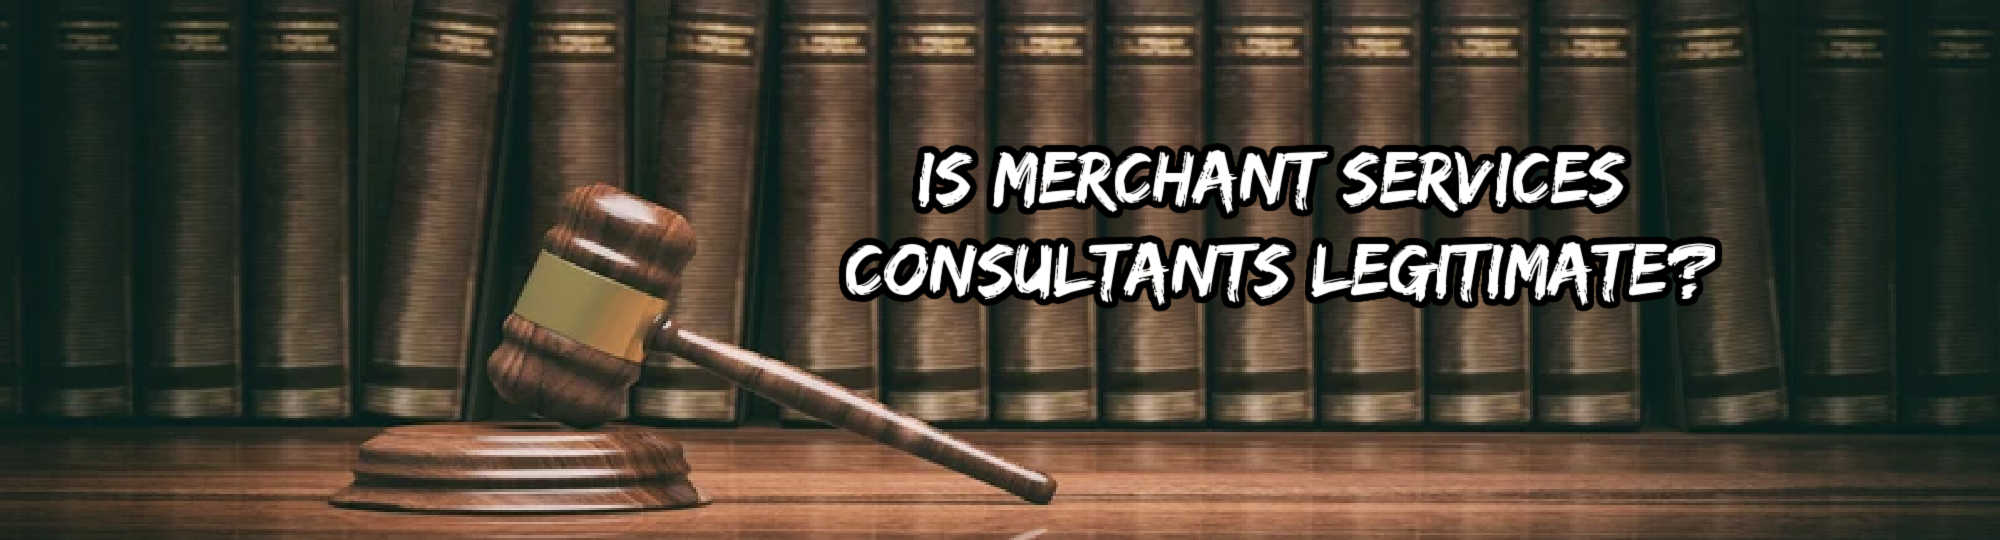 image of is merchant services consultants legitimate